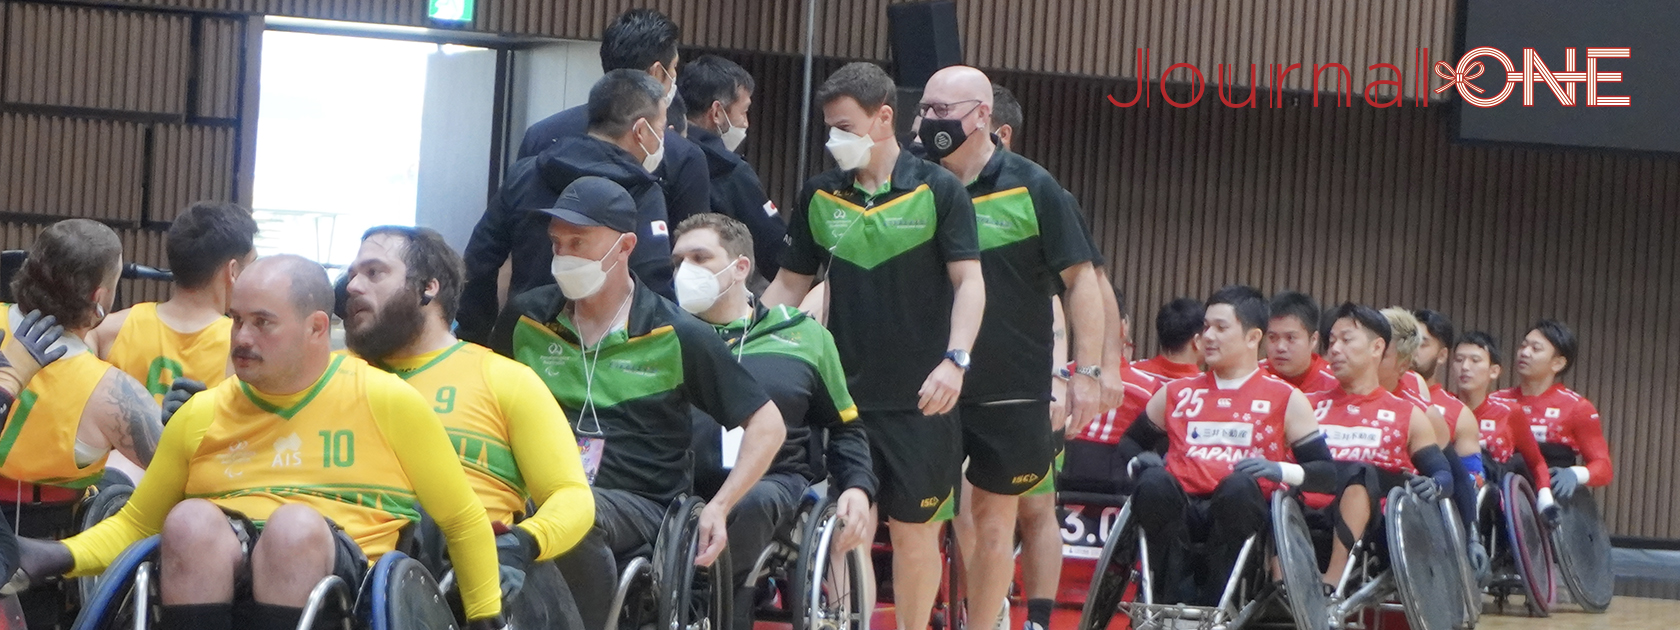 Journal-ONE Wheelchair rugby JAPAN AUSTRALIA